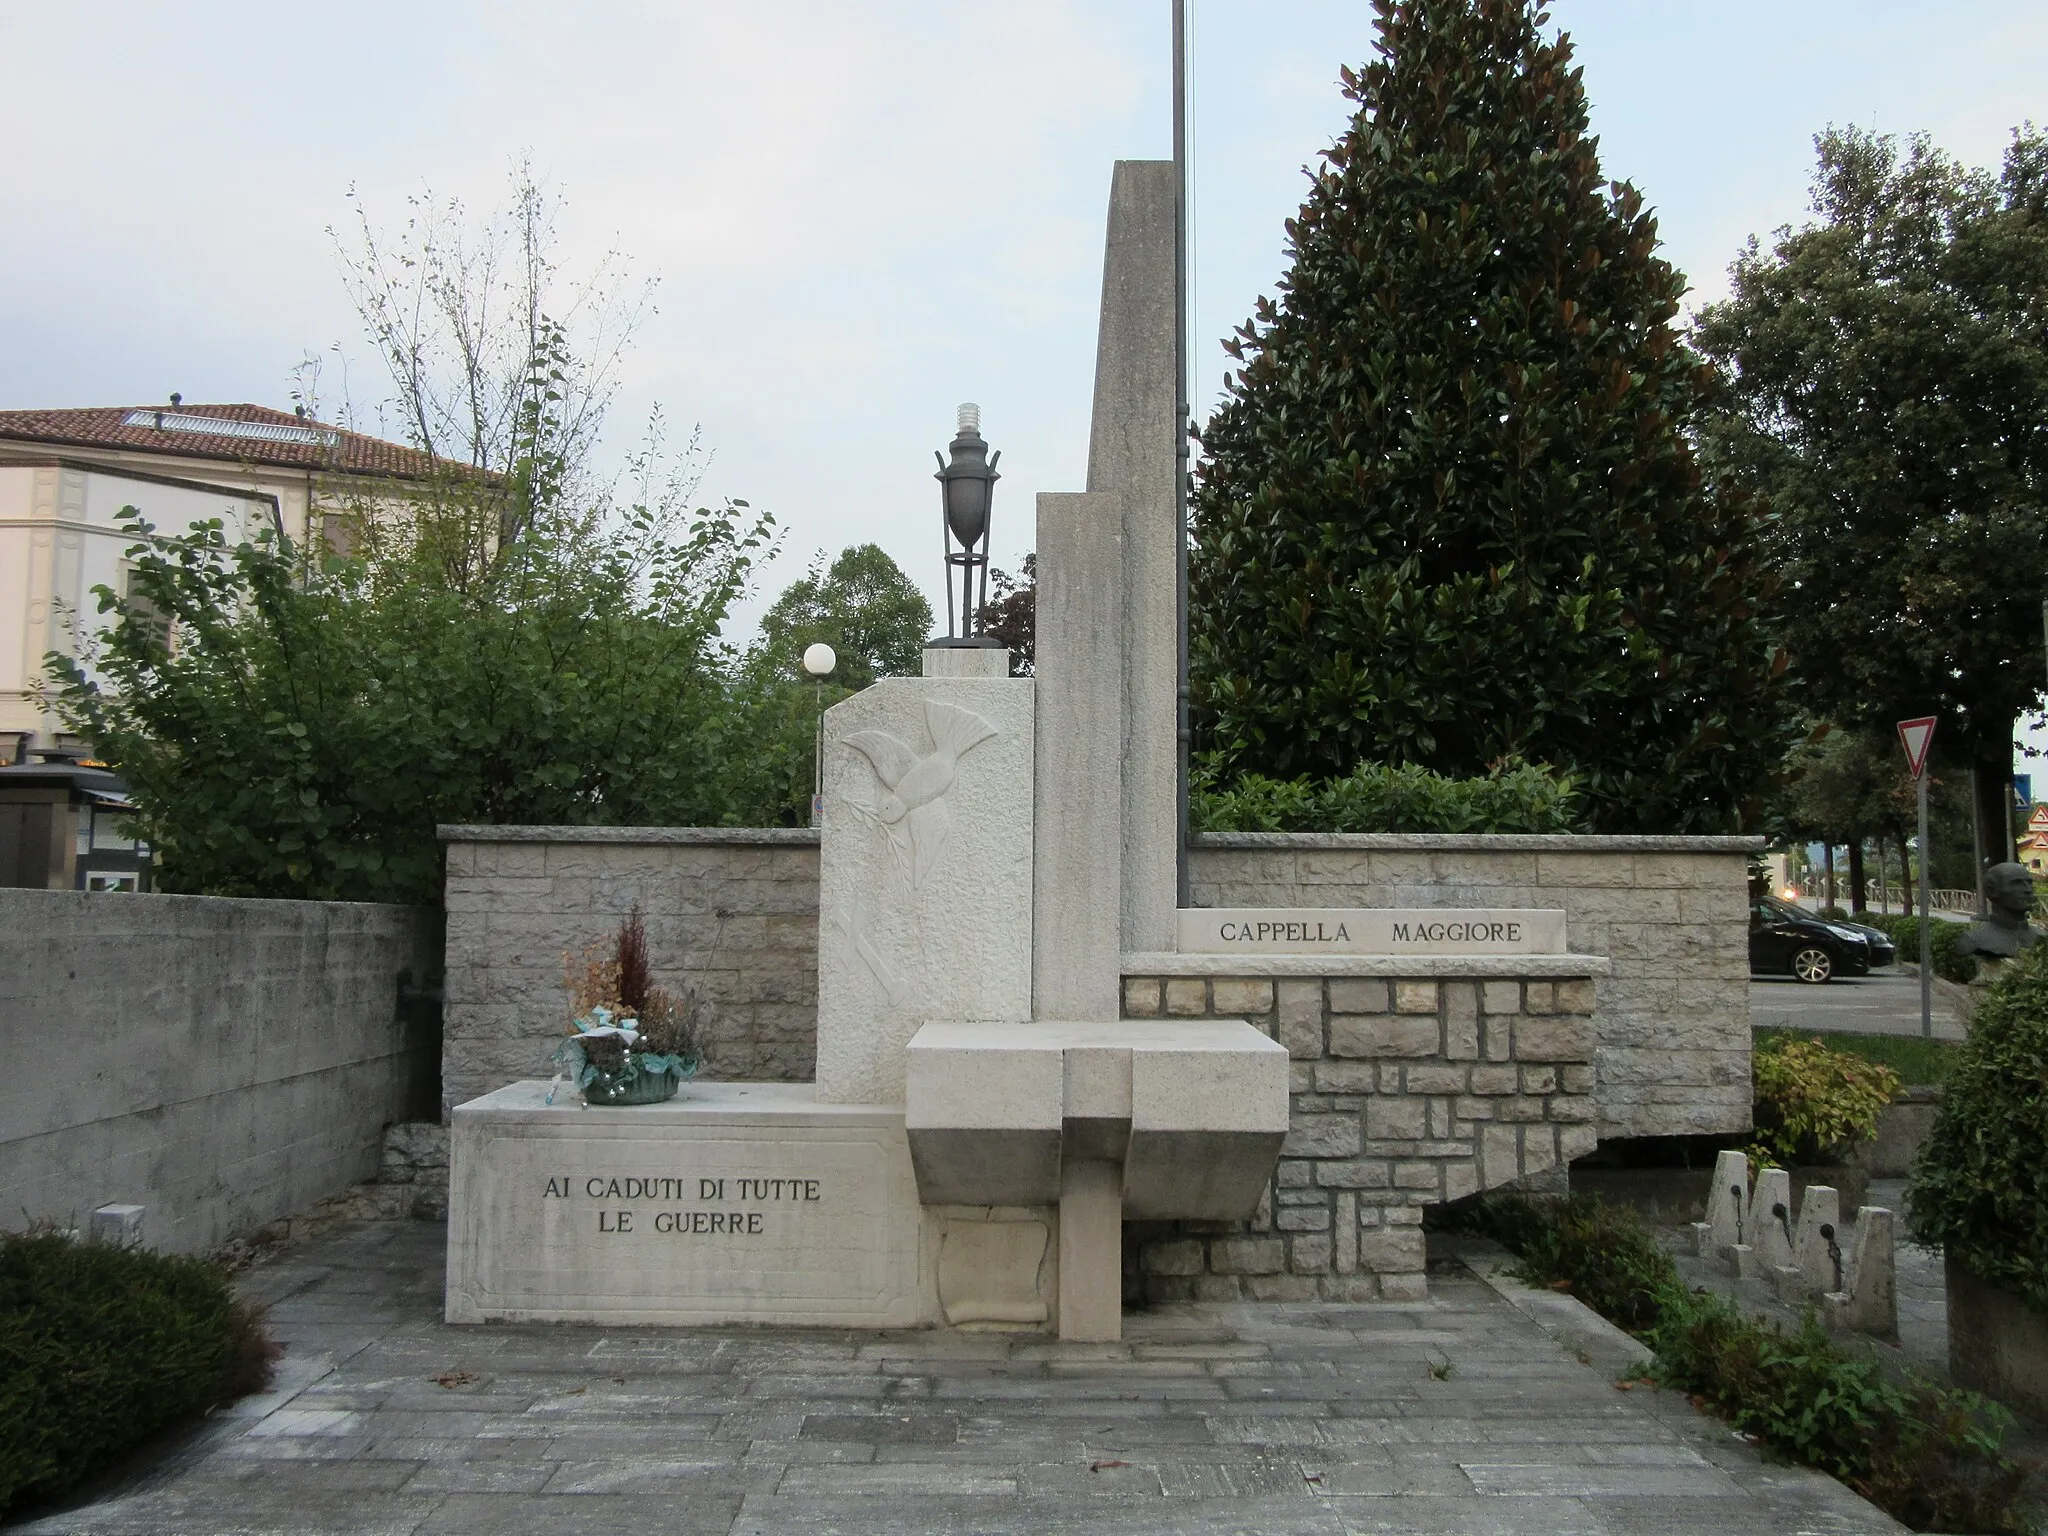 Photo showing: Cappella Maggiore (TV), "to the fallen in all wars" memorial